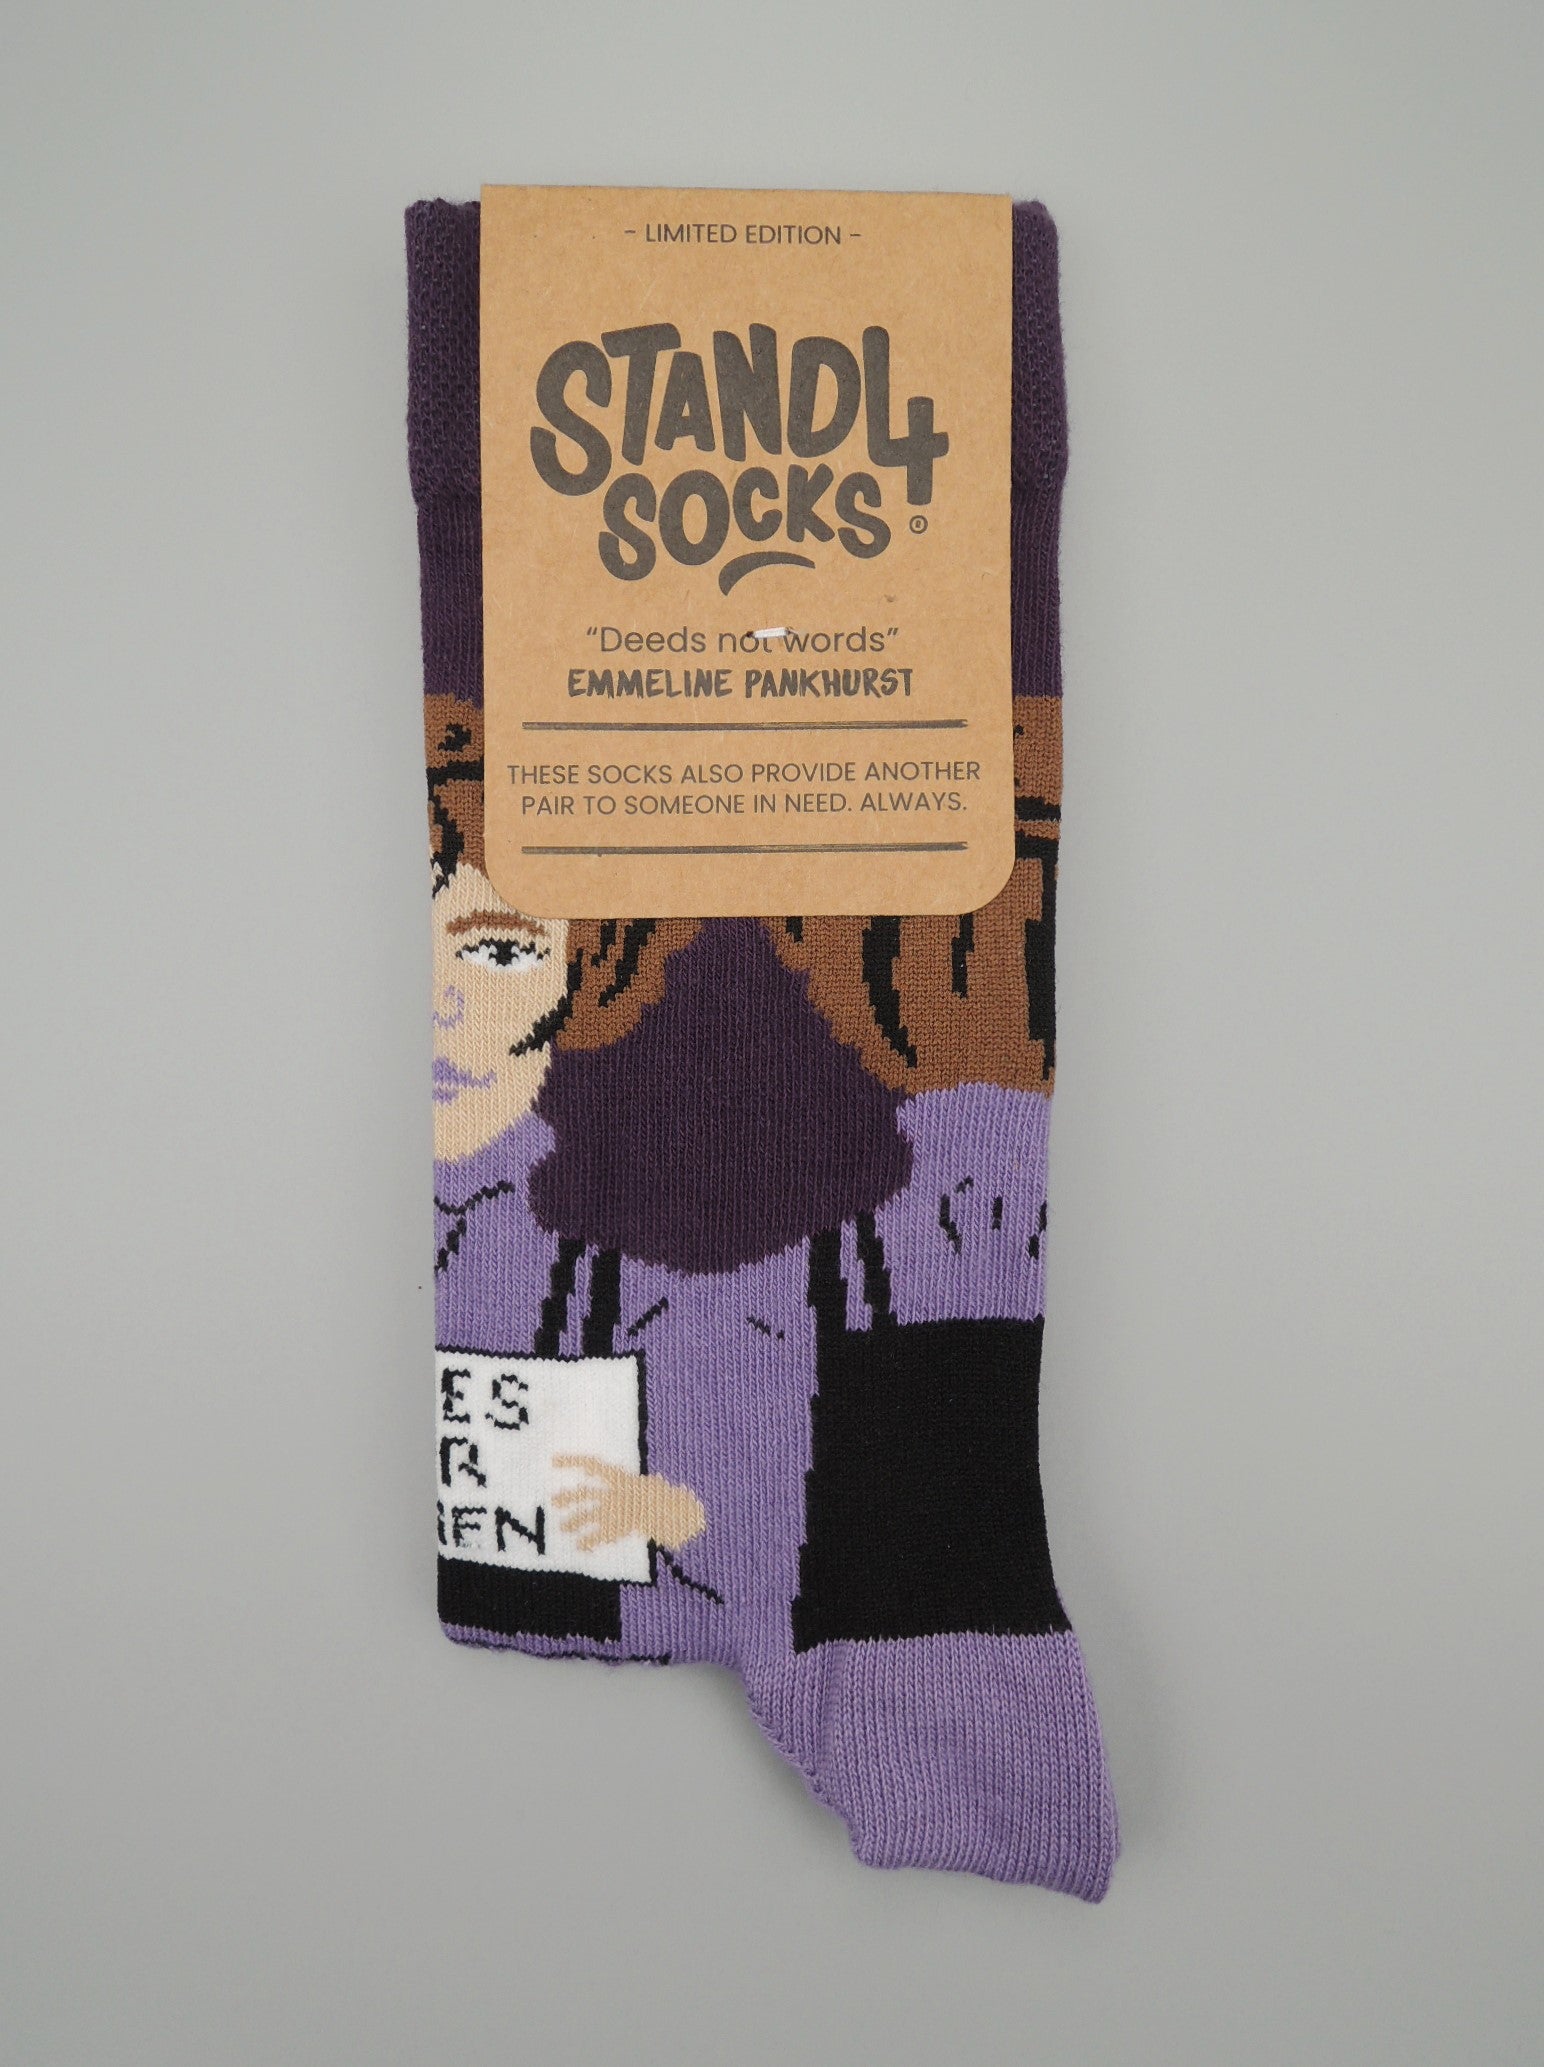 Stand4 Sockscotton crew sockDolly Parton – Mary Queen of Socks